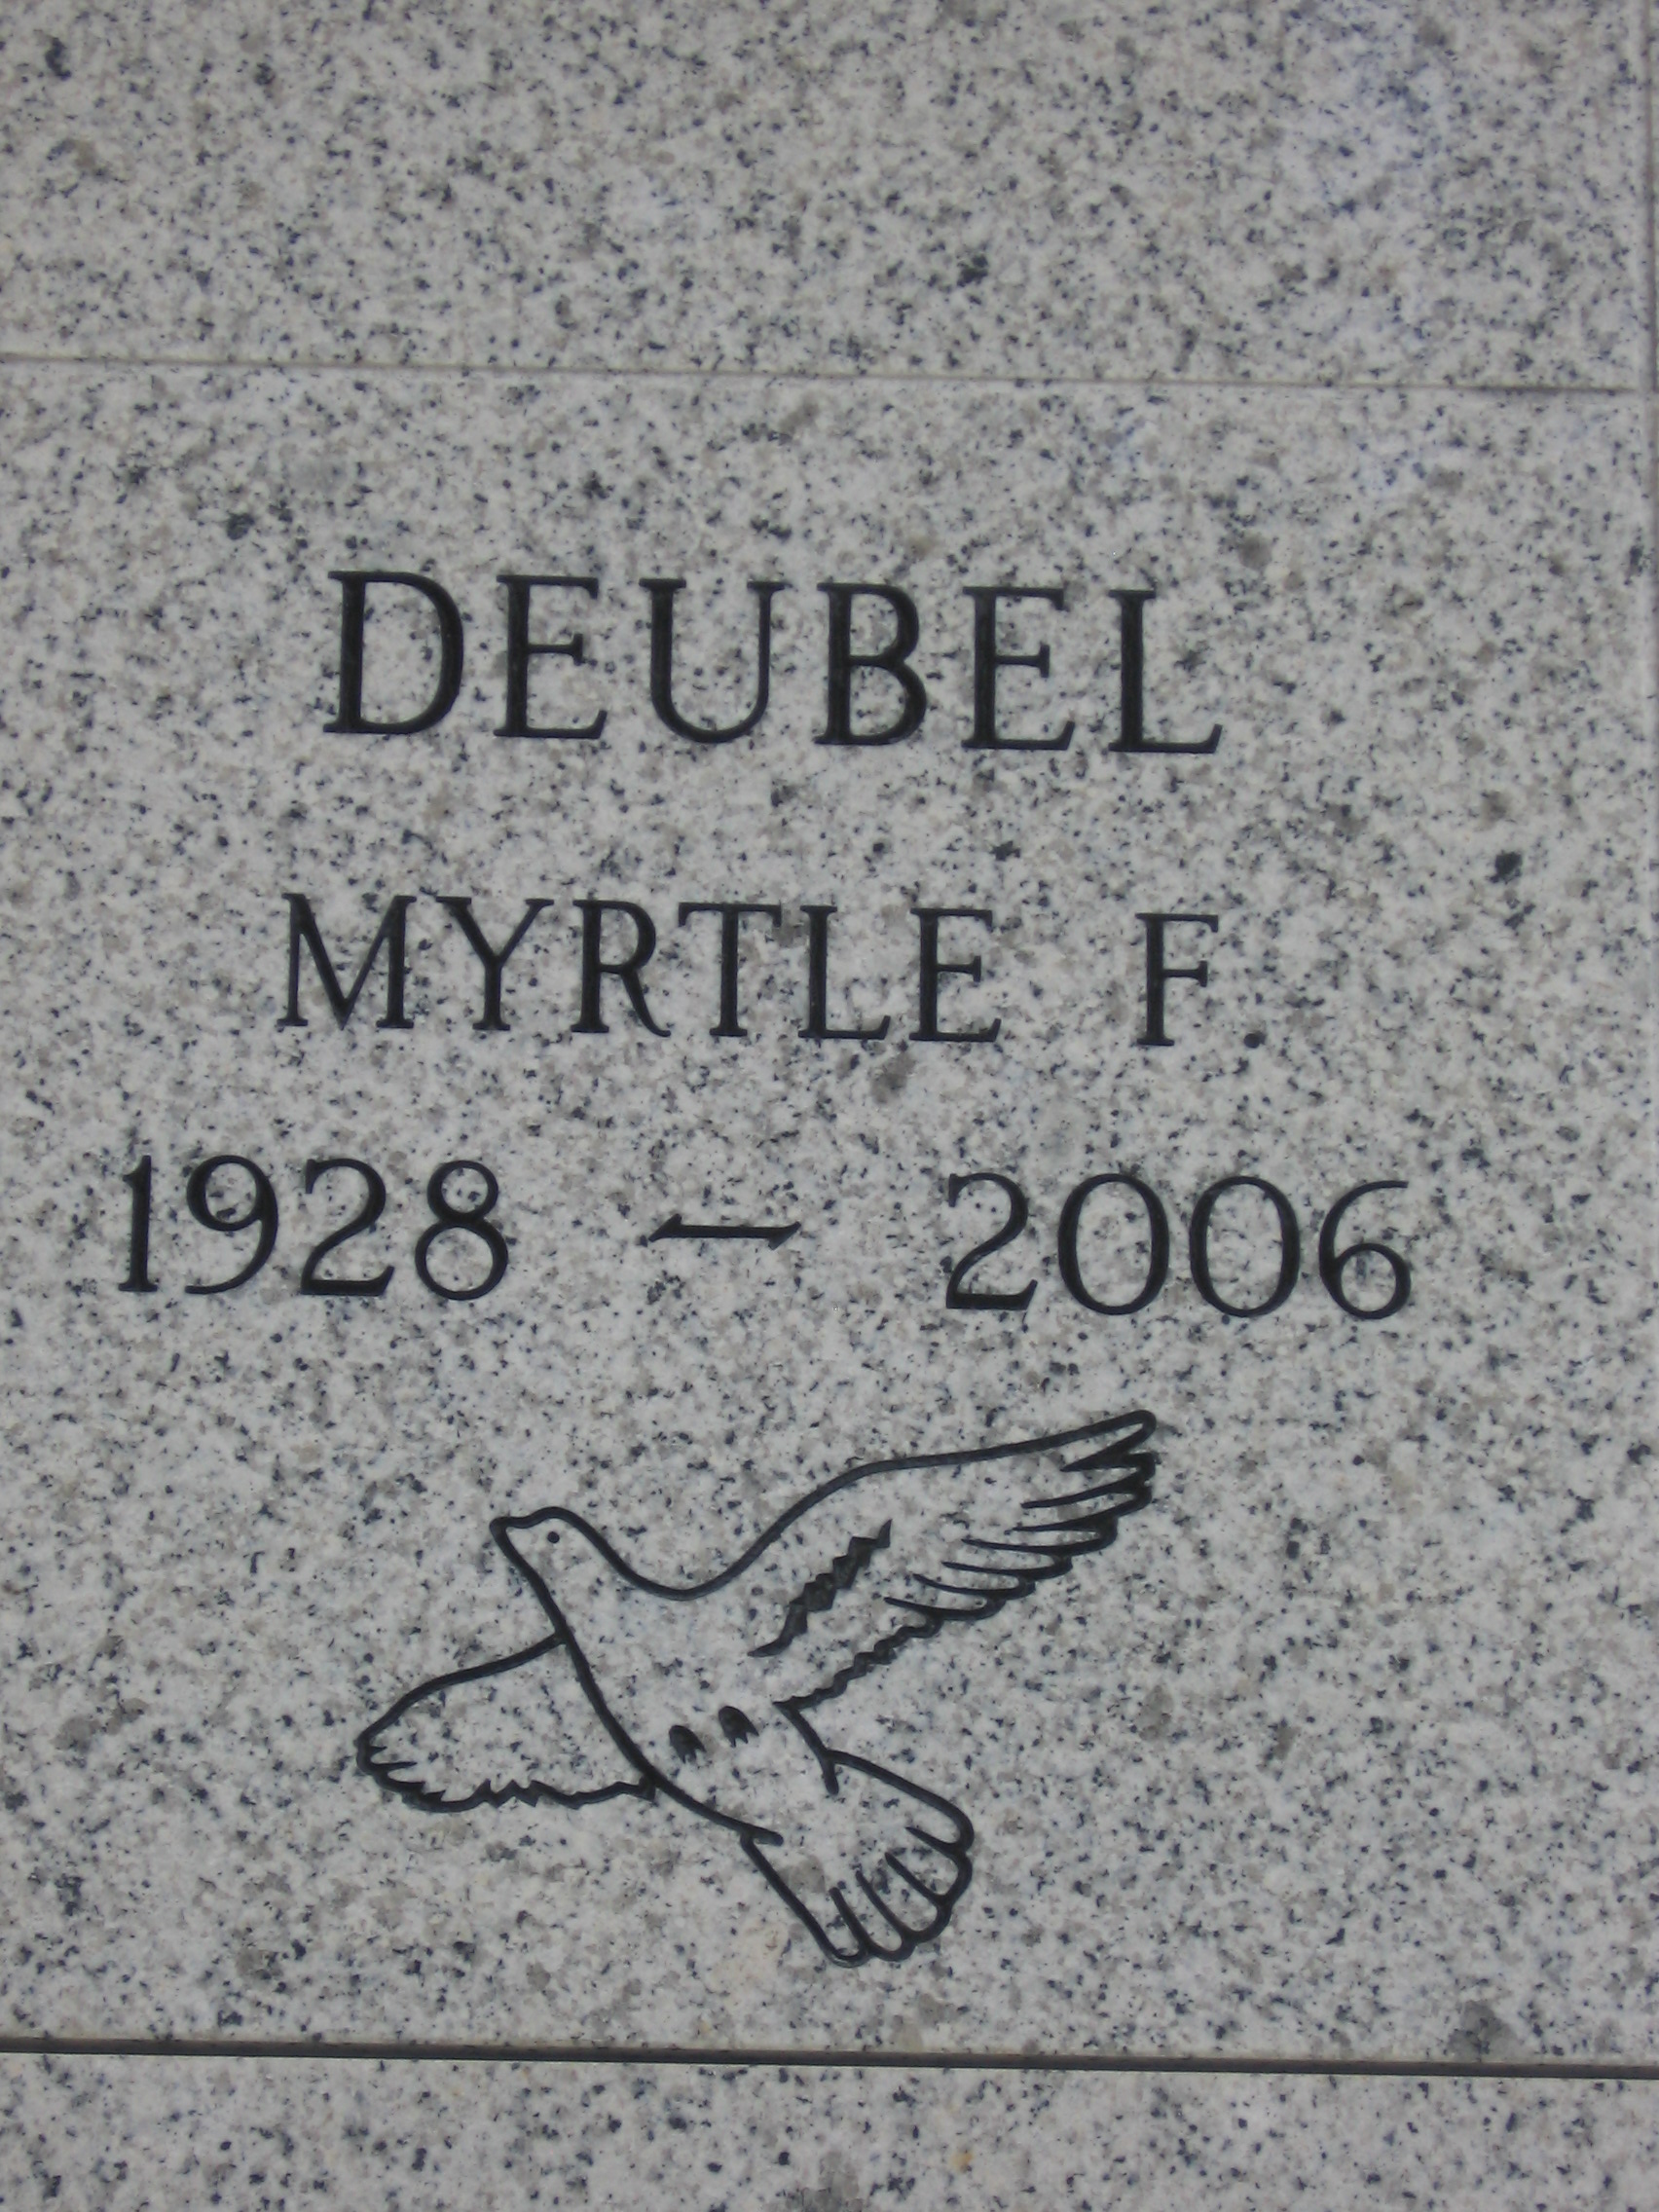 Myrtle F Deubel